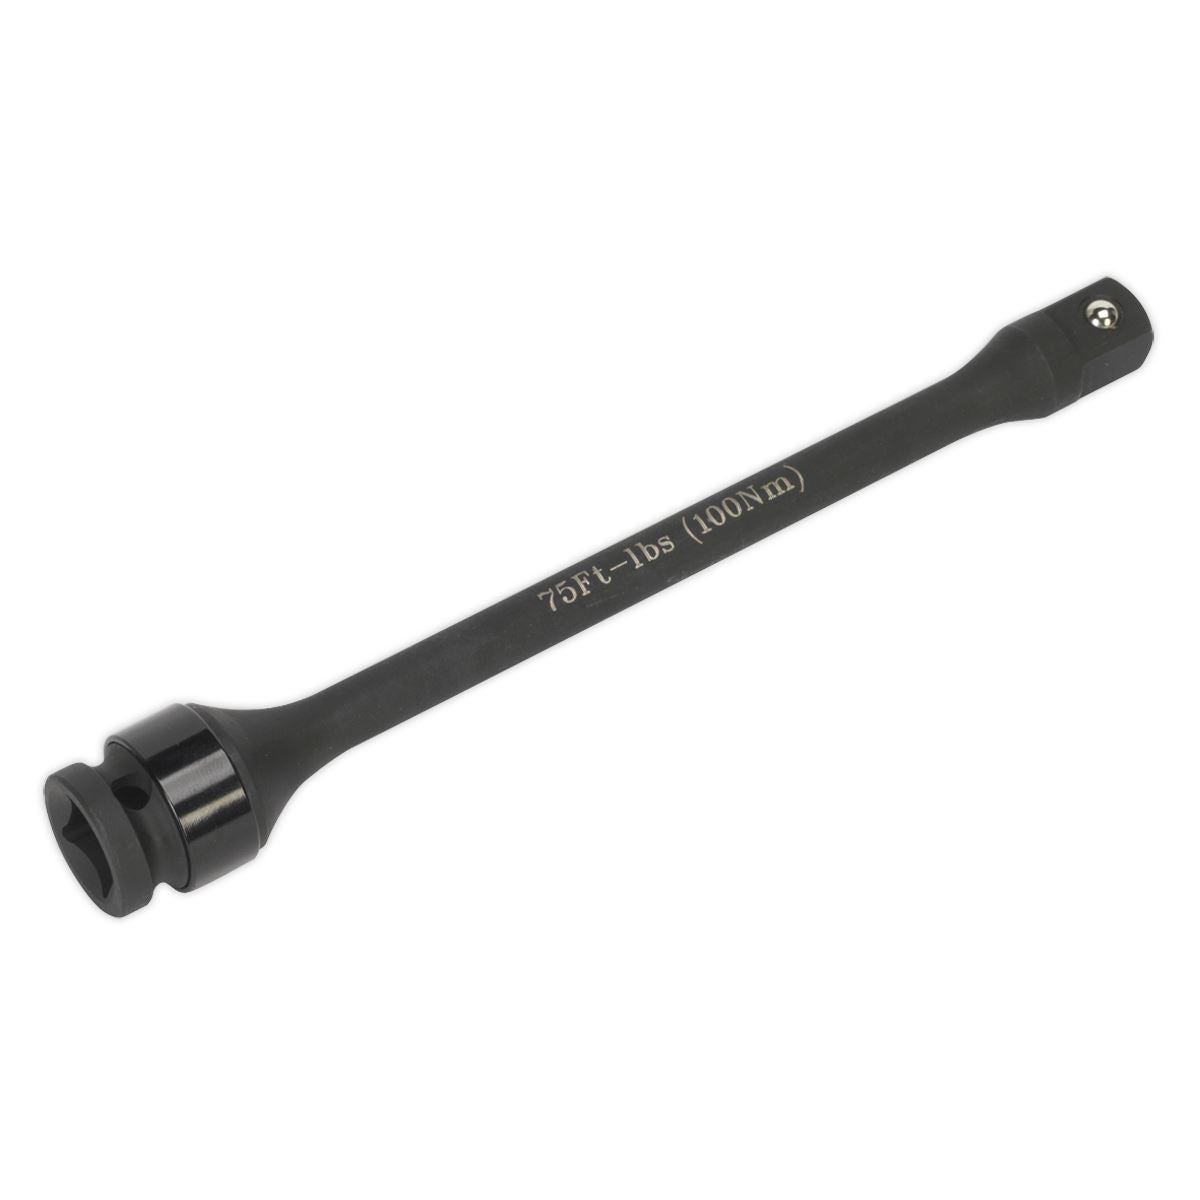 Sealey Torque Stick 1/2"Sq Drive 100Nm